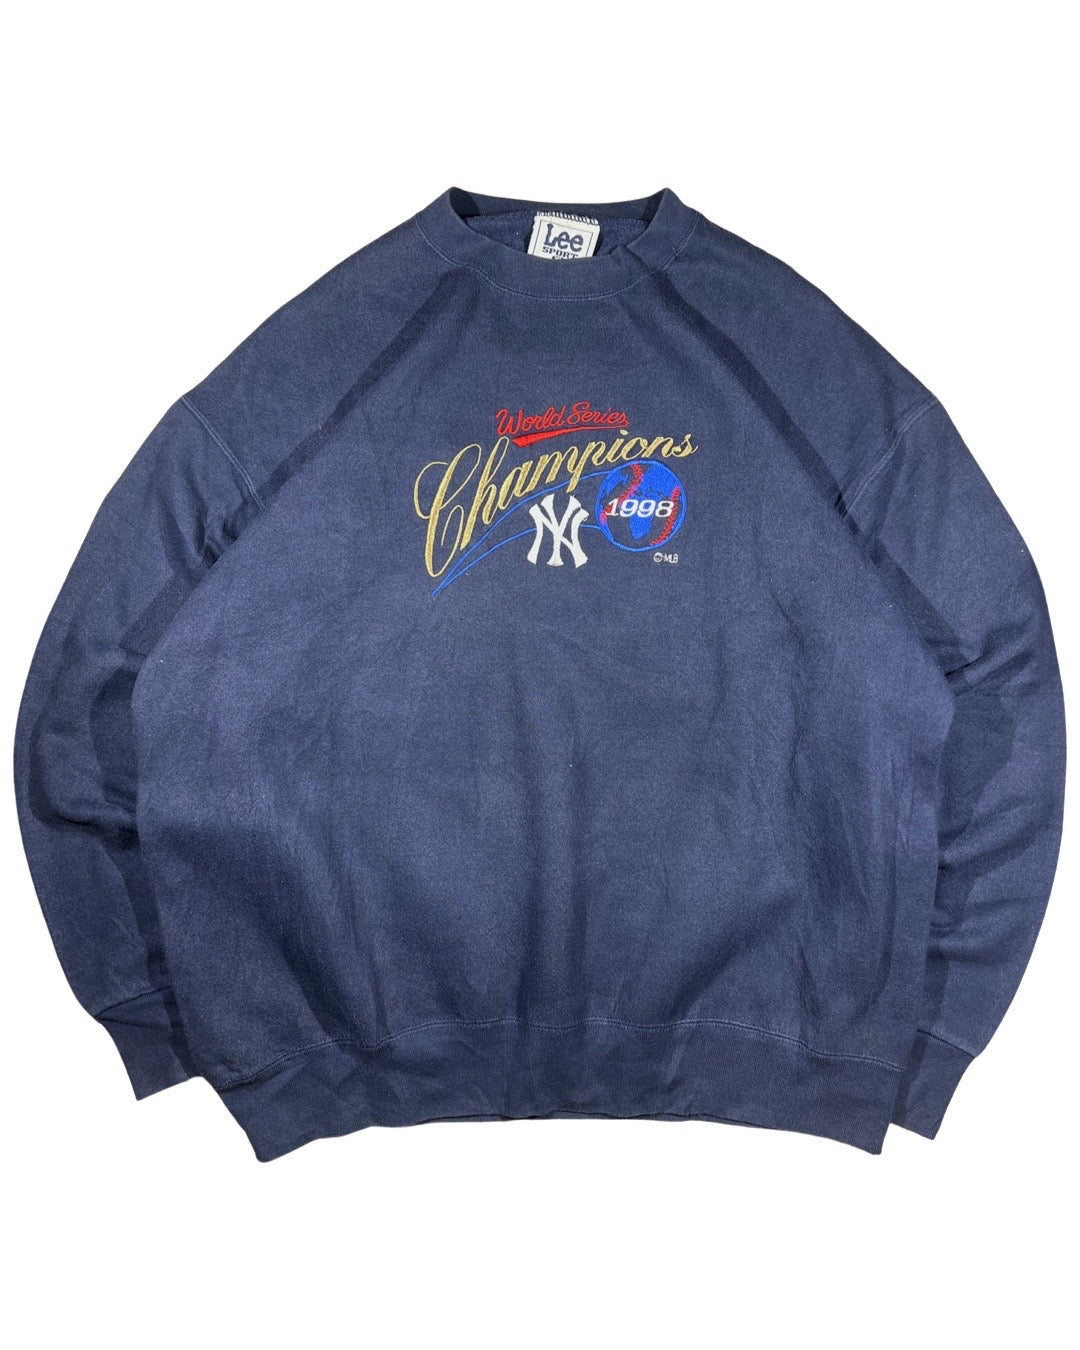 Vintage NY Yankees Crew - XL